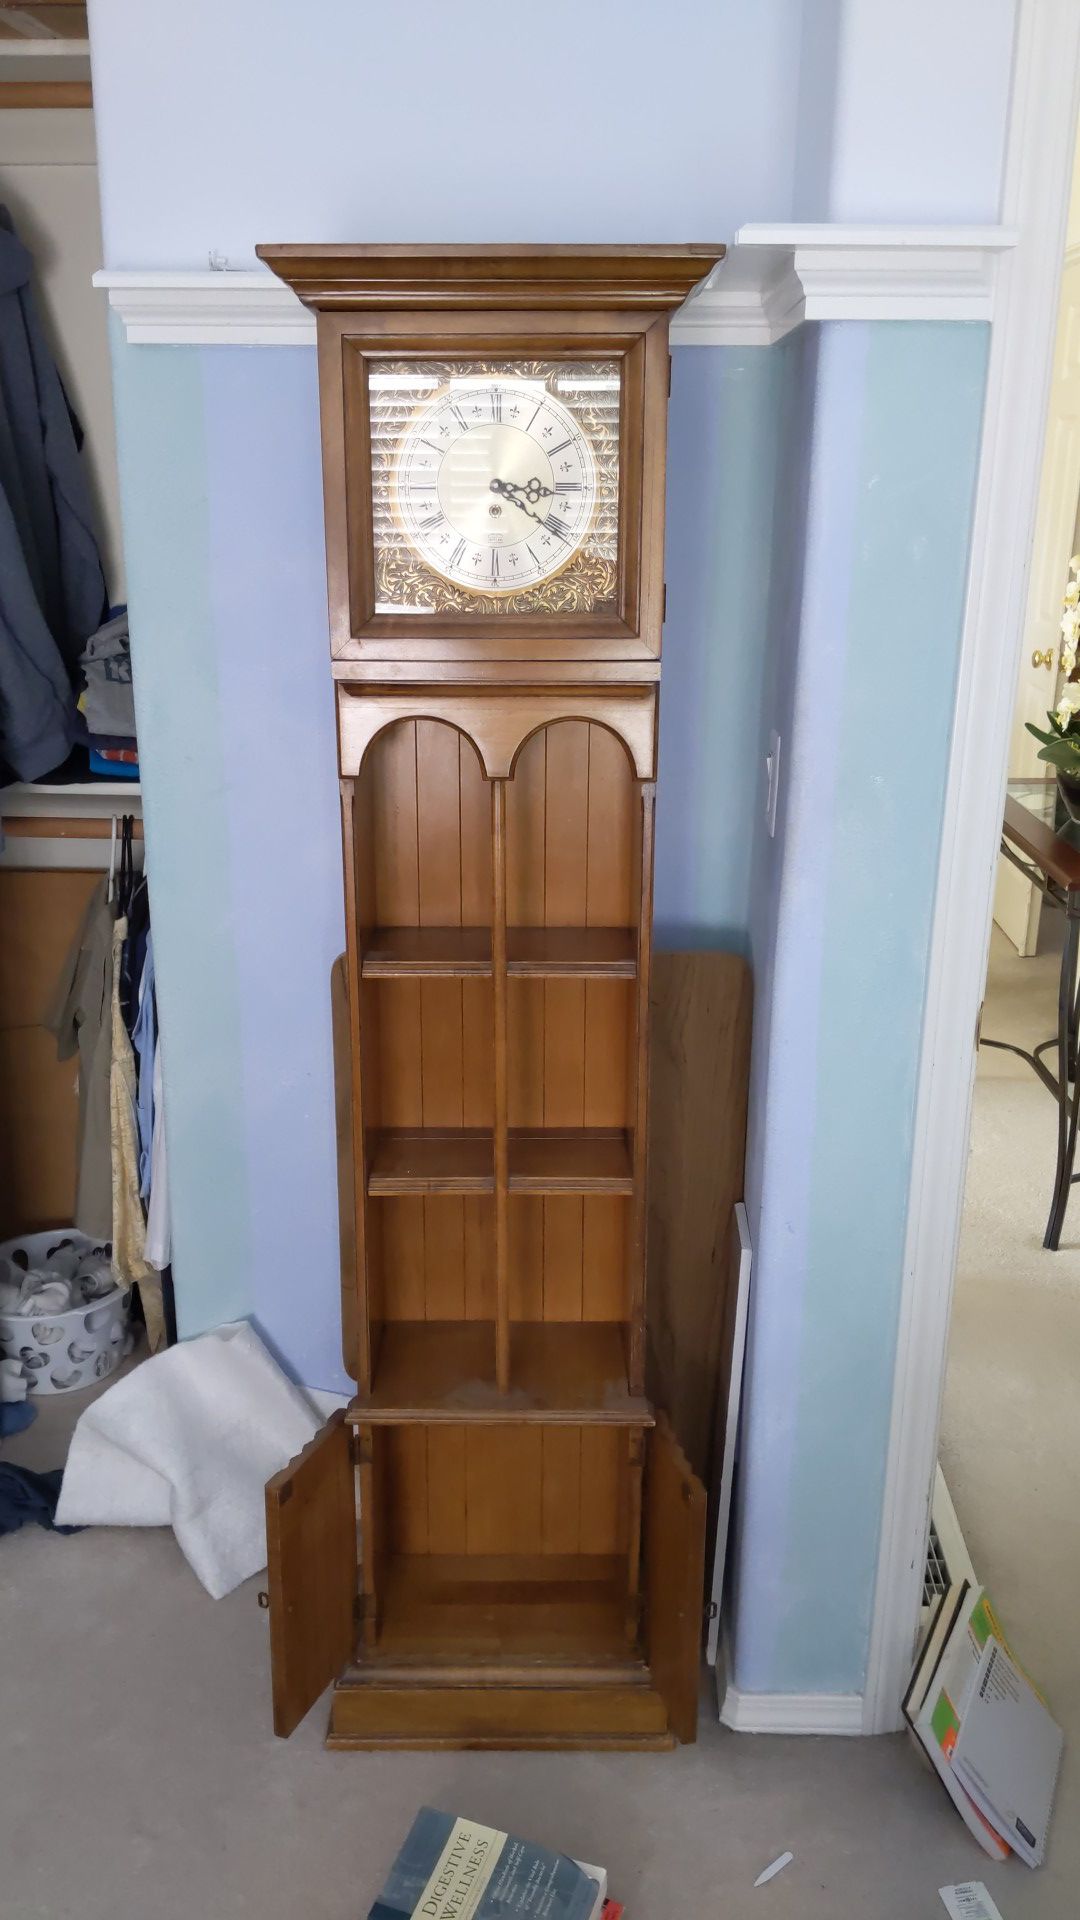 Antique Butler bookshelf with clock